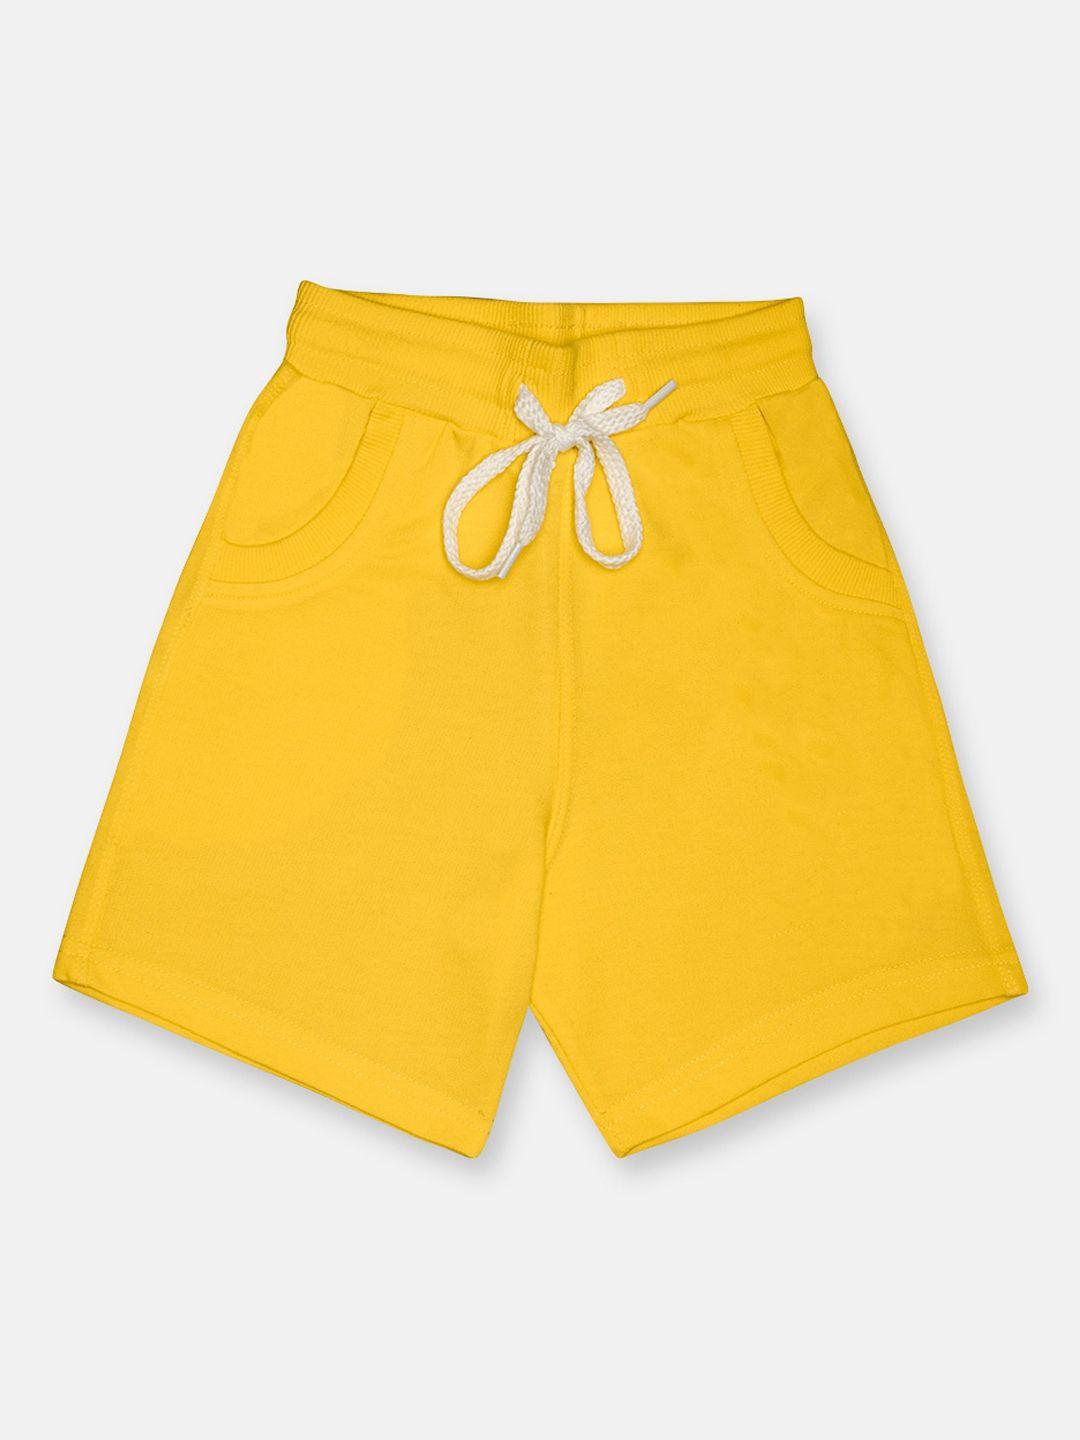 chimprala unisex kids yellow mid-rise regular shorts